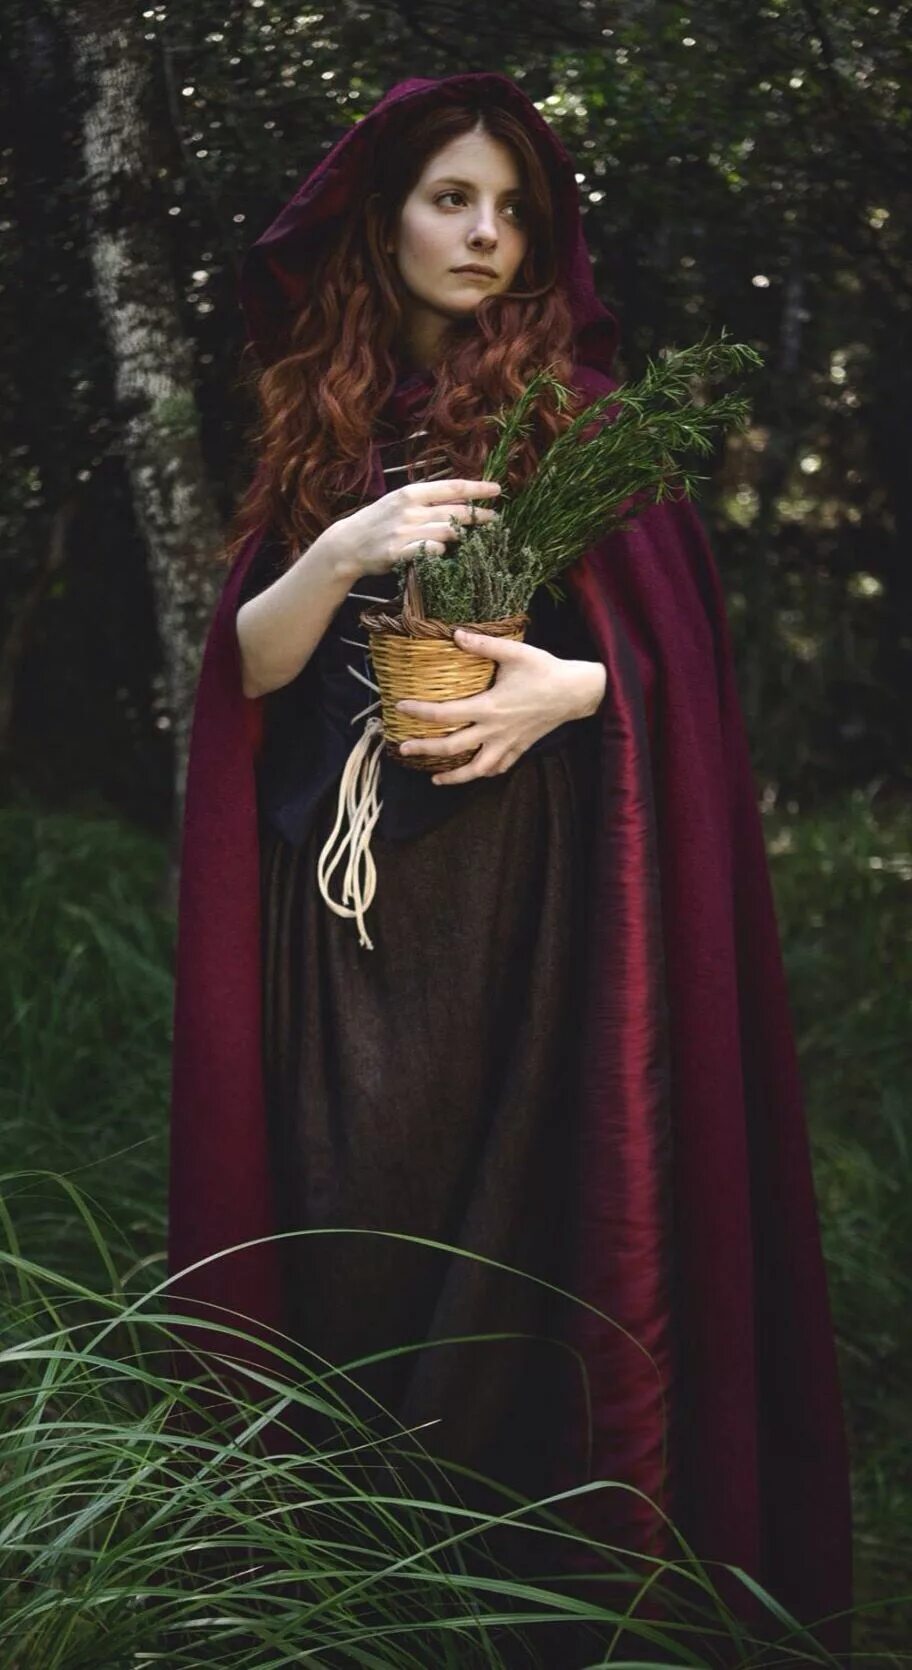 Hedge Witch ведьма. Лесная ведьма. Ведьма фотосессия. Фотосессия Лесная ведьма.